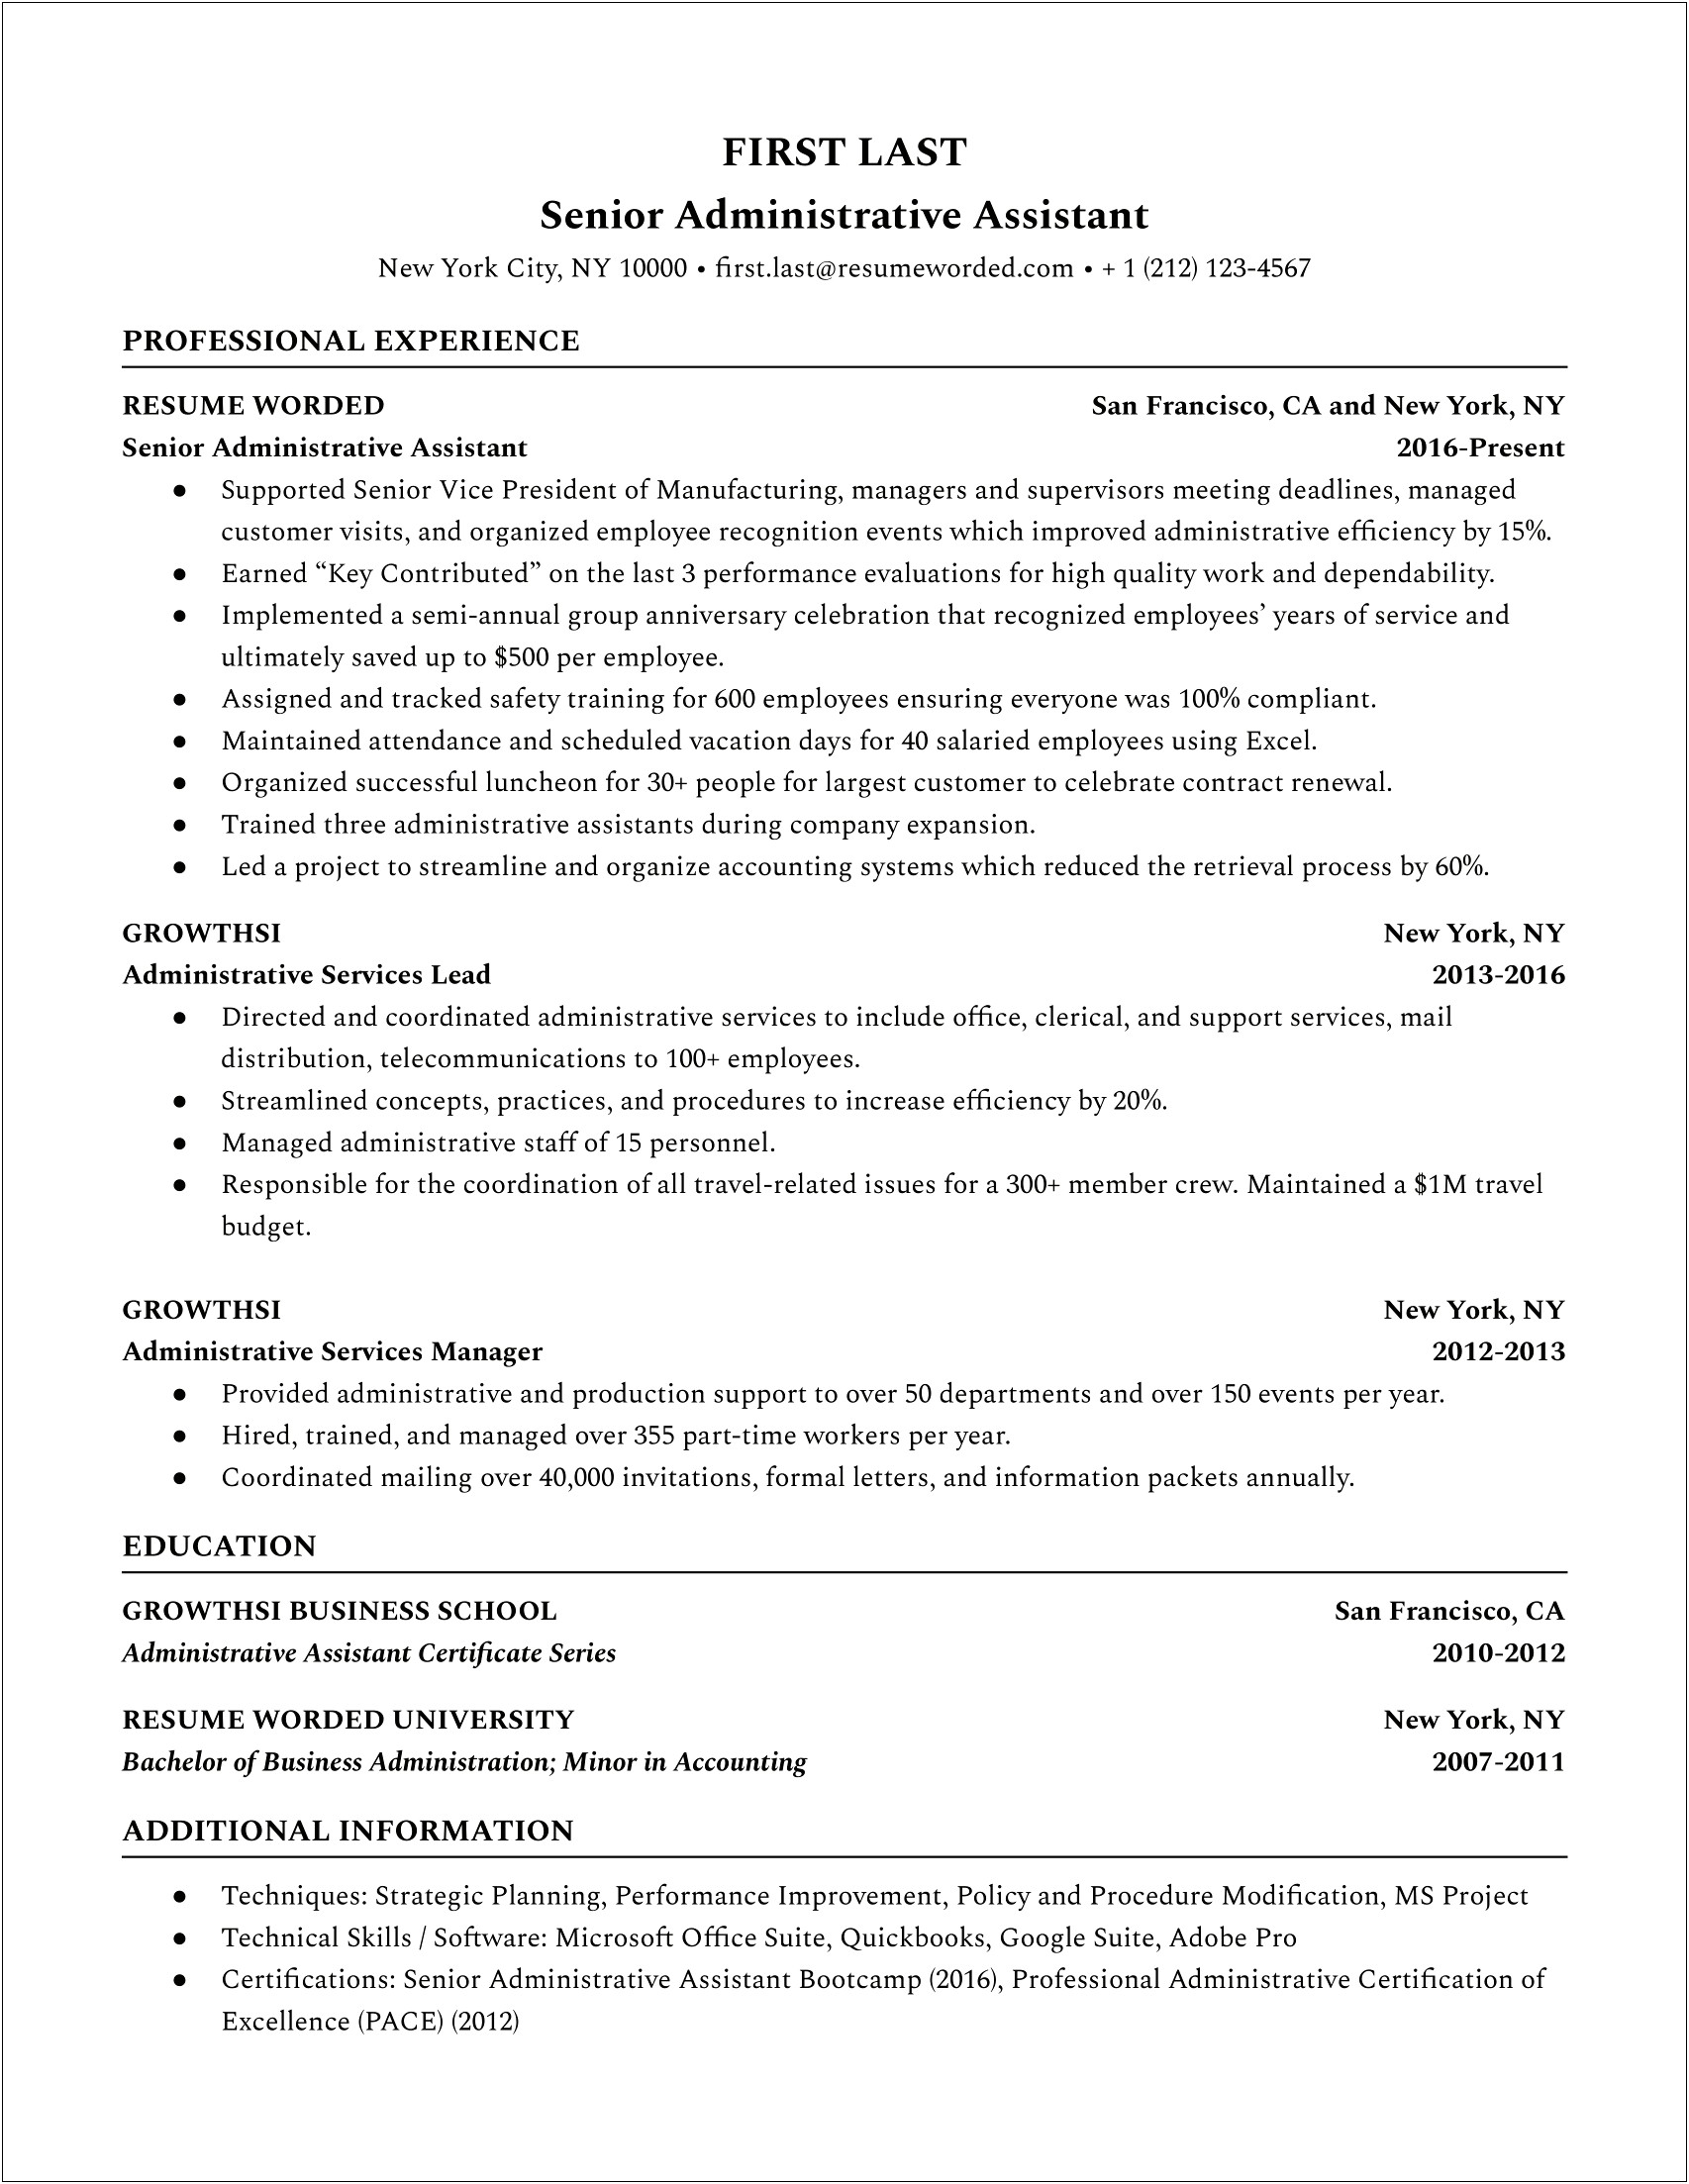 Senior Administrative Assistant Job Description For Resume